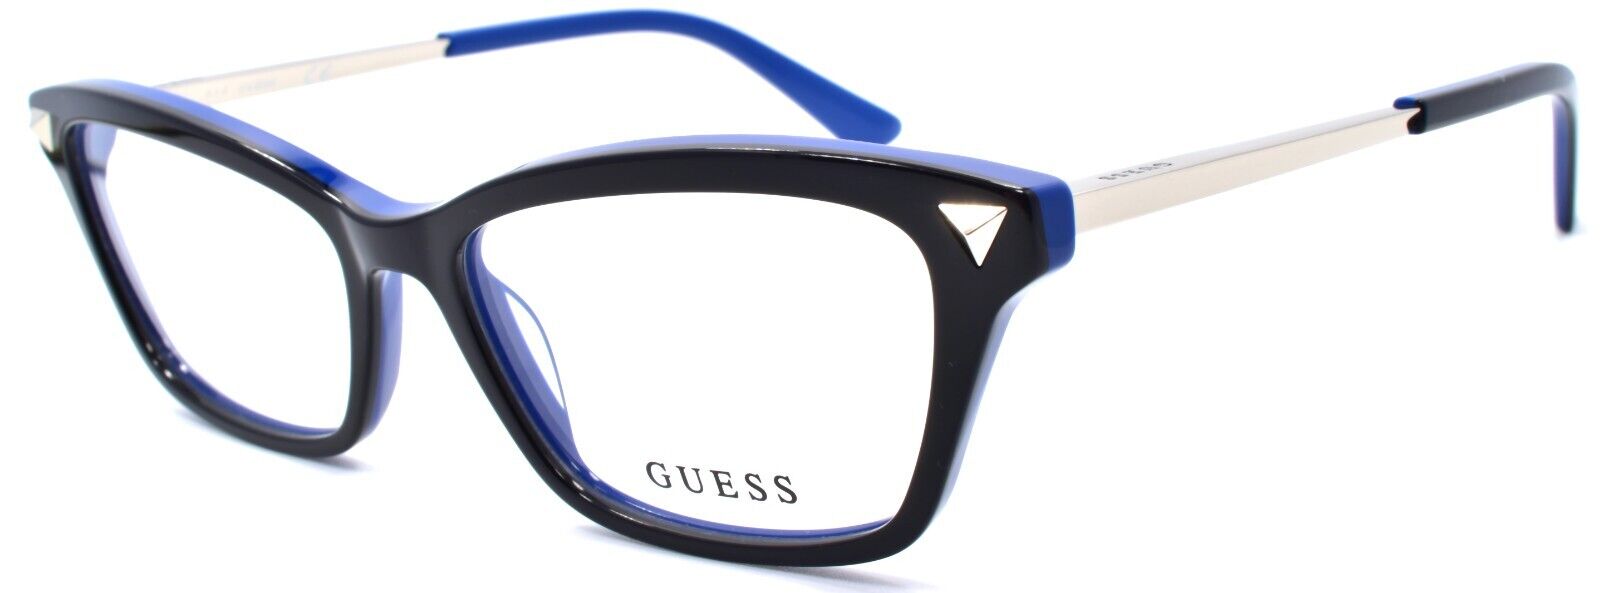 1-GUESS GU2797 005 Women's Eyeglasses Frames Cat Eye 52-15-140 Black / Blue-889214156495-IKSpecs